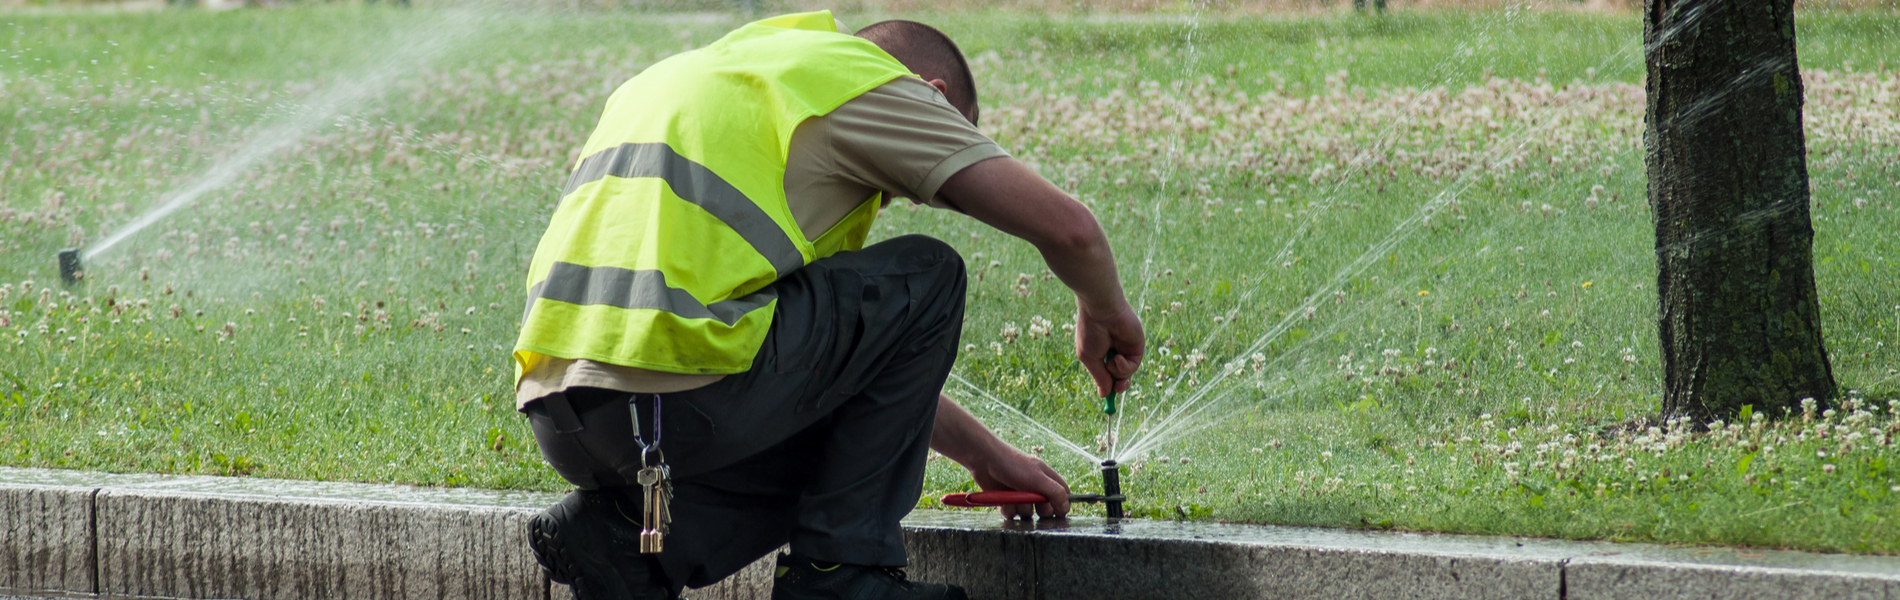 Brentwood, MO irrigation repair | professional Brentwood, MO irrigation repair services | Lawn Sprinklers St. Louis